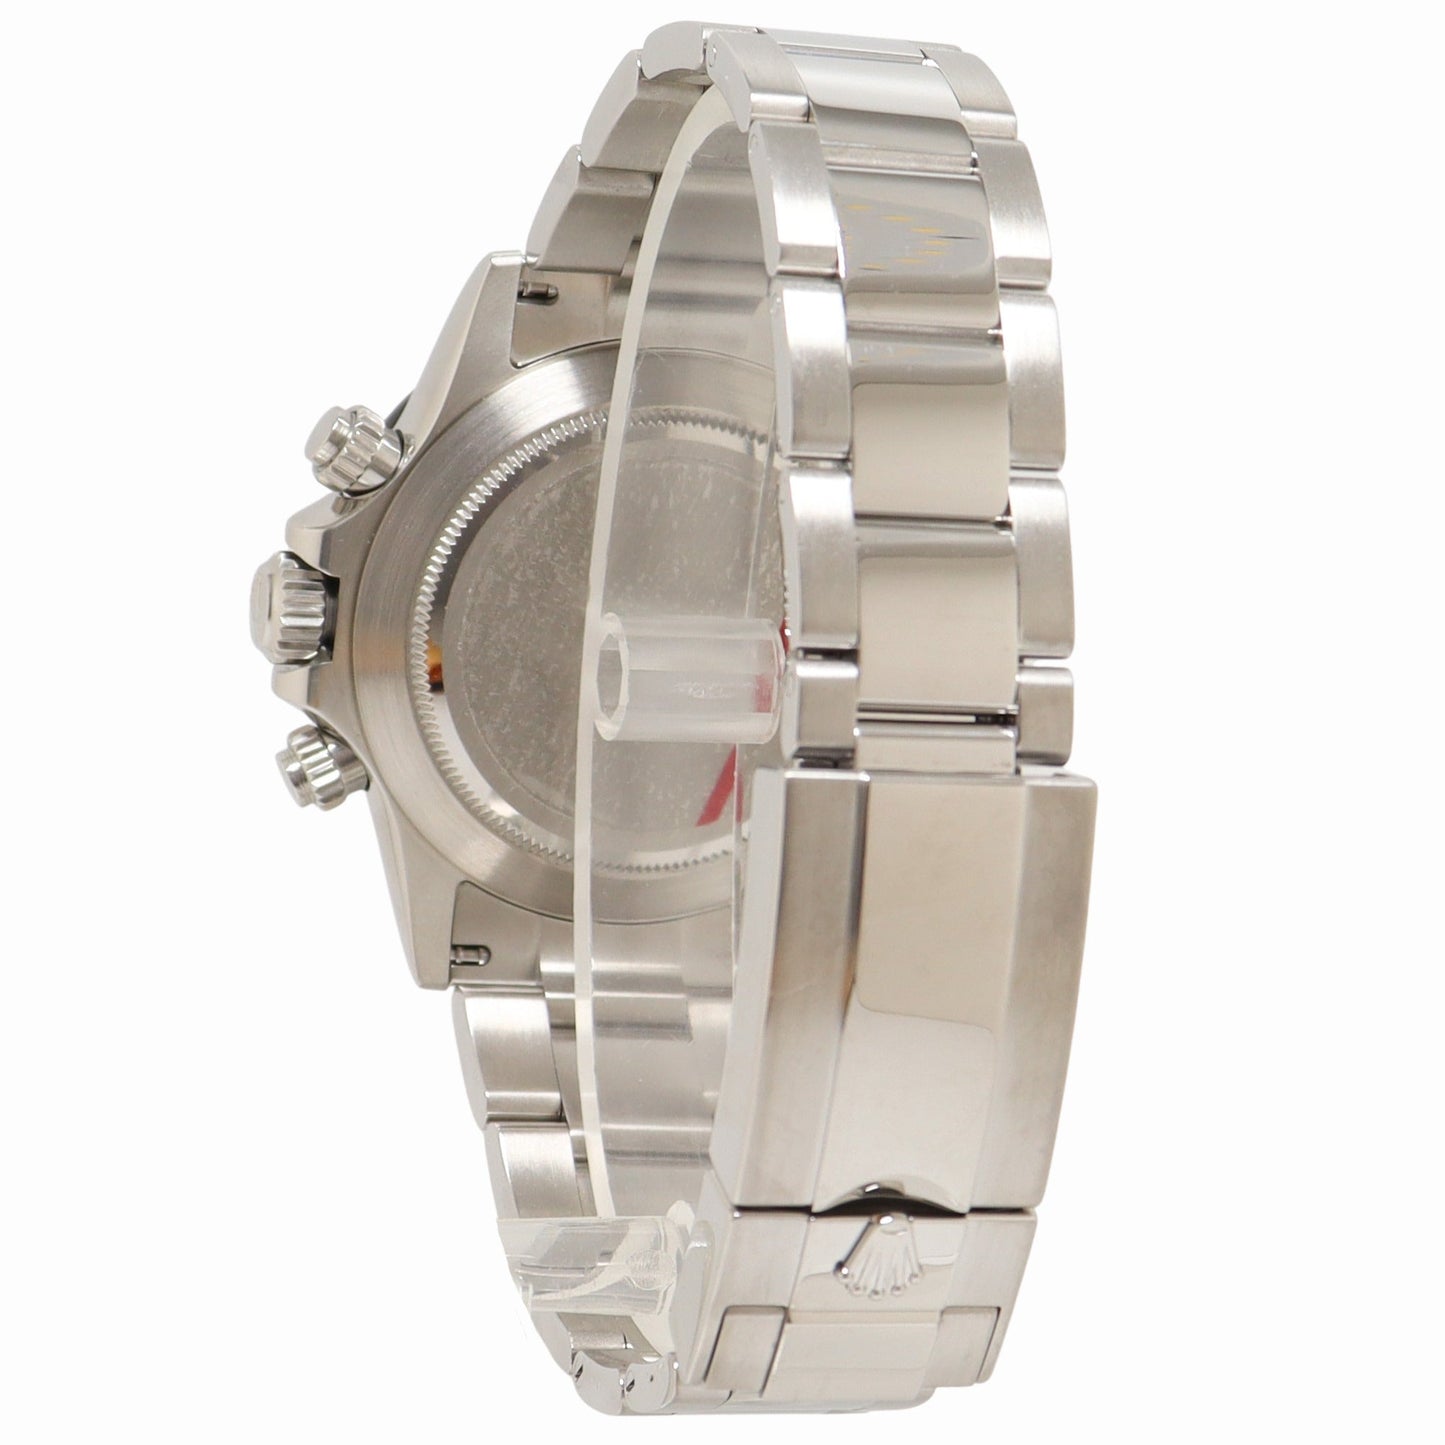 Rolex Daytona "Panda" 40mm Stainless White Chronograph Dial Watch Reference# 116500LN - Happy Jewelers Fine Jewelry Lifetime Warranty